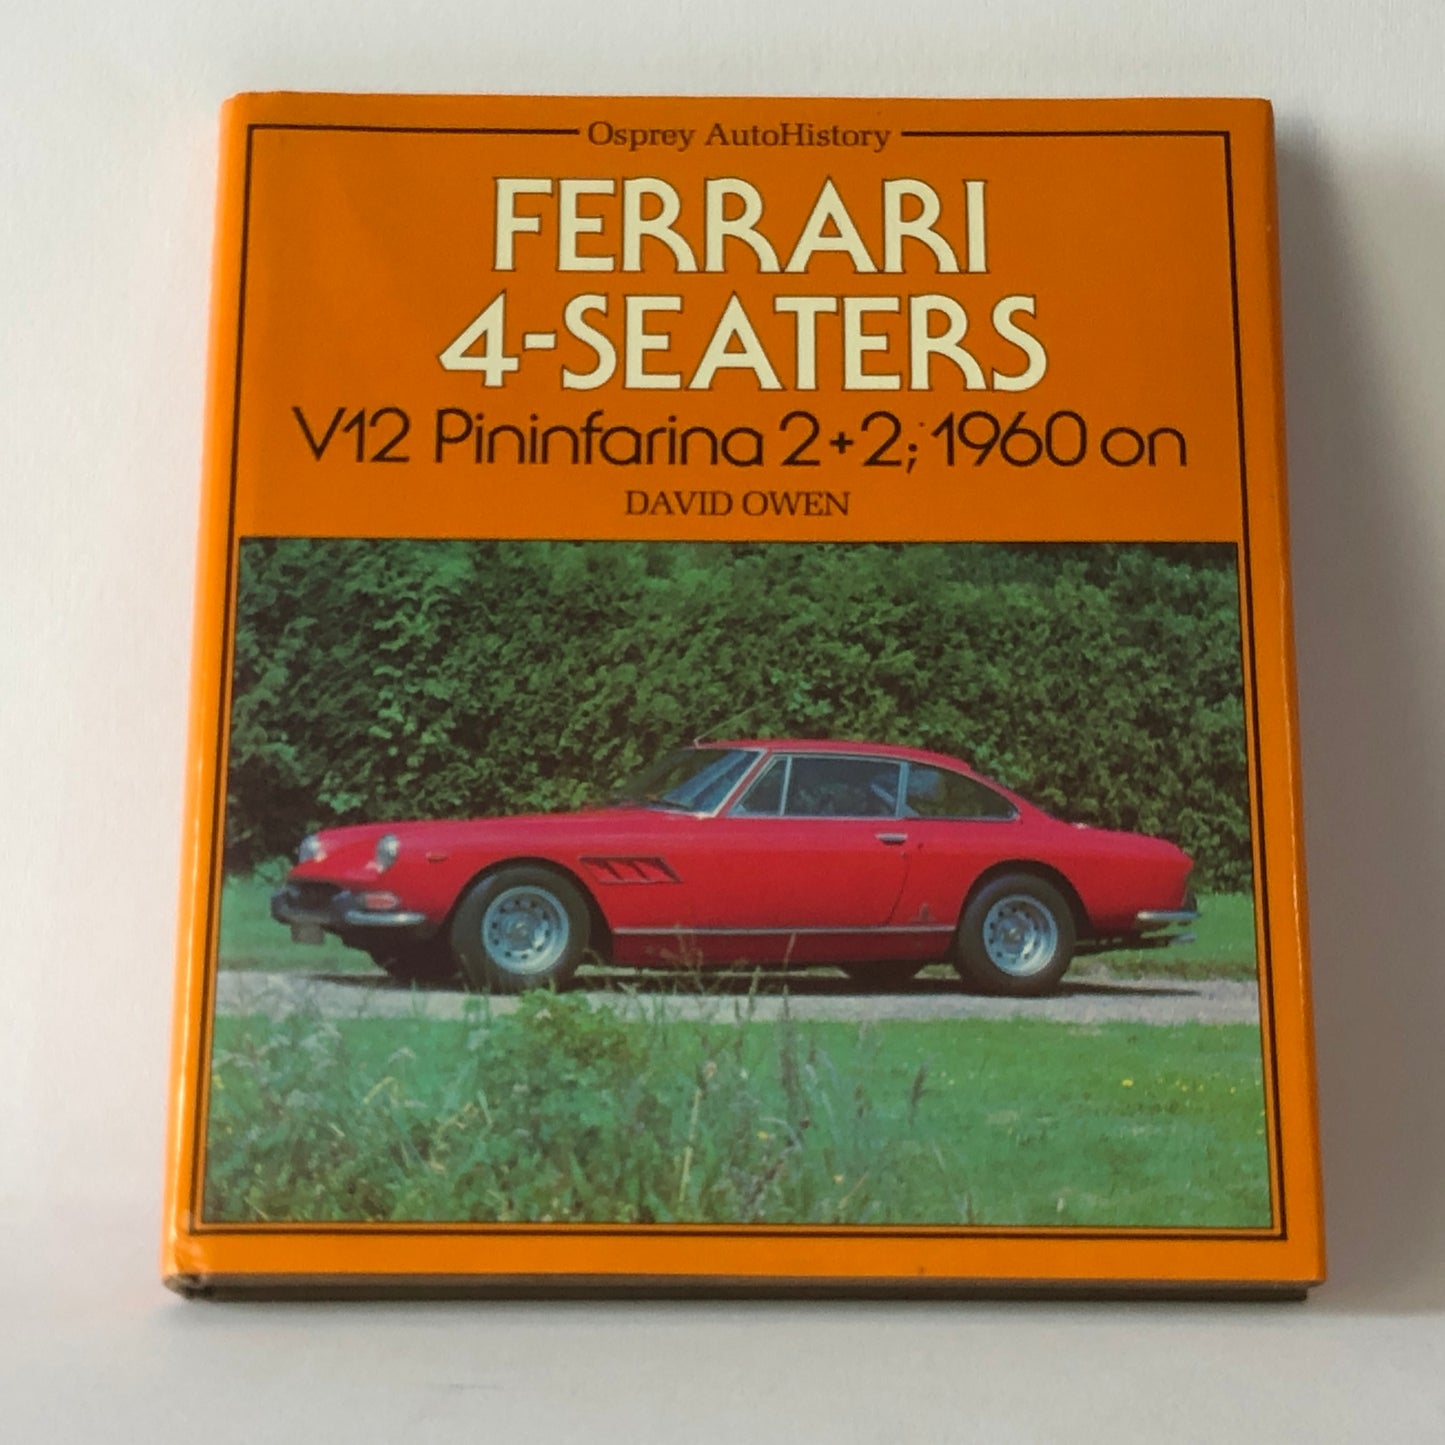 Ferrari, Libro Ferrari 4 Seaters V12 Pininfarina 2+2 1960 on, David Owen, ISBN 0850454972 - Raggi's Collectibles' Automotive Art